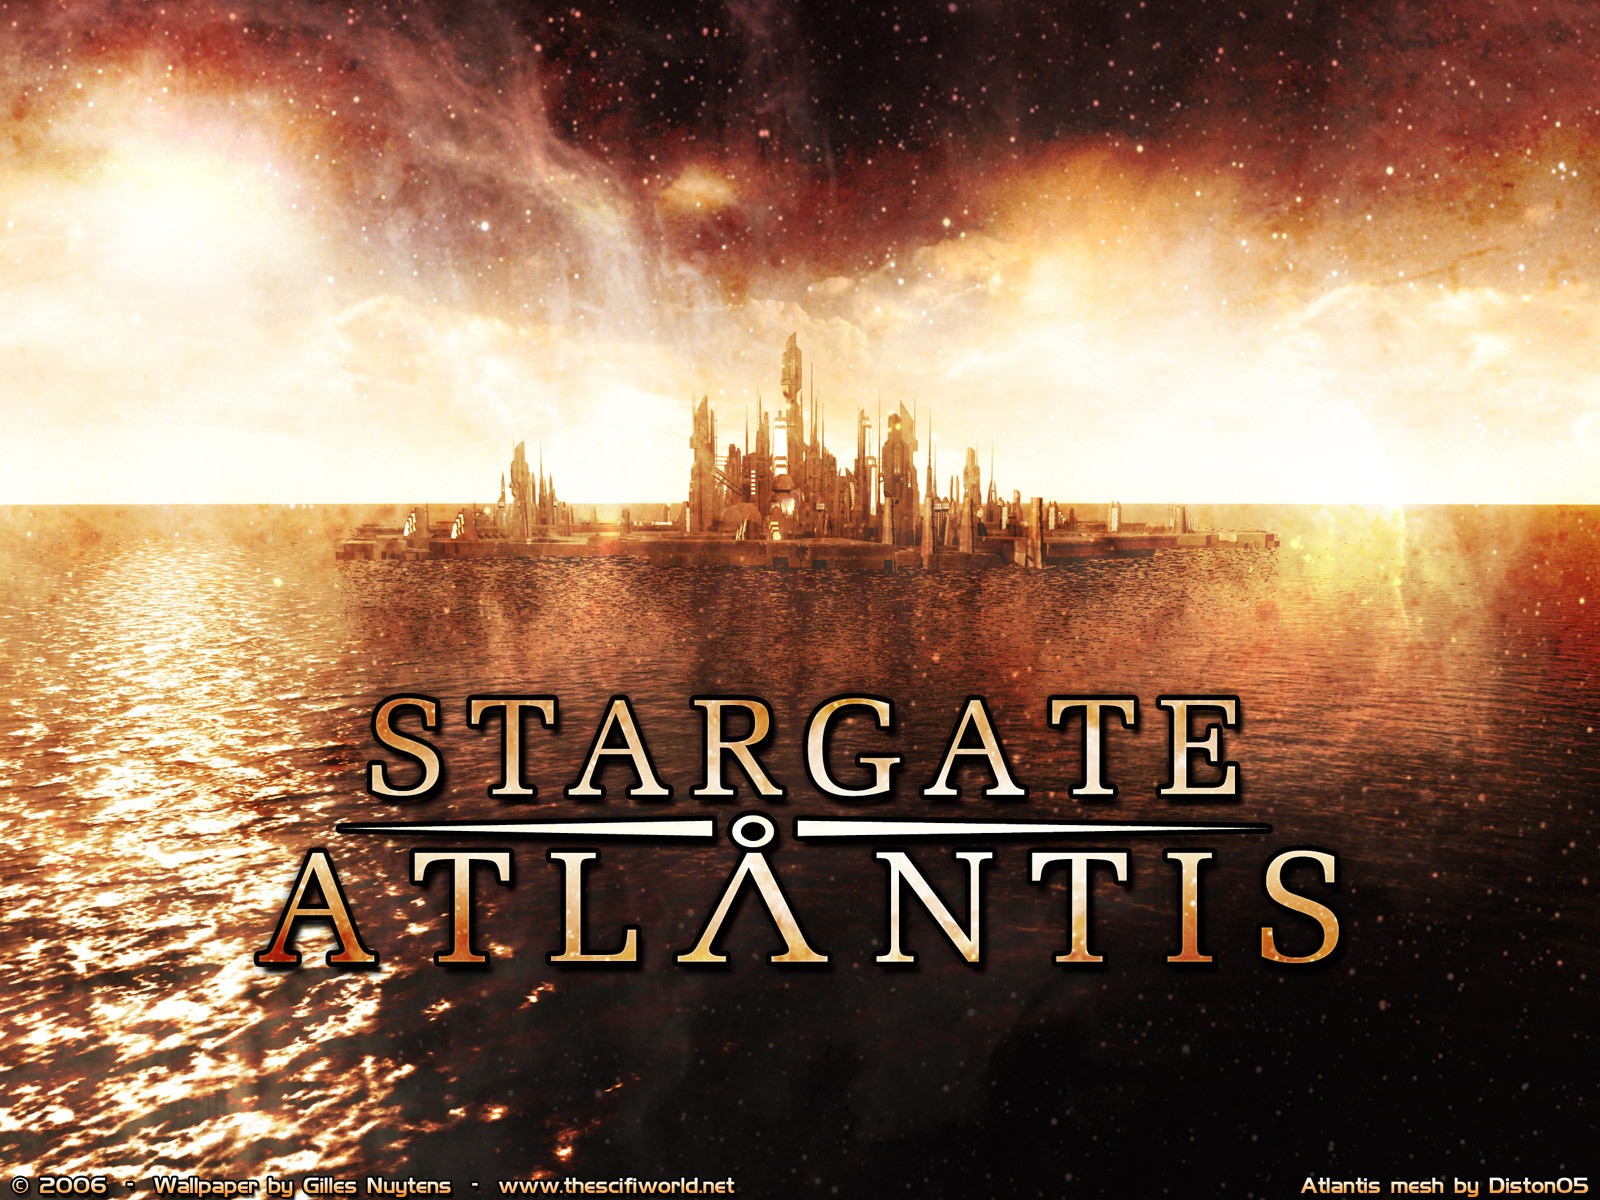 sga - Stargate: Atlantis Wallpaper (9110999) - Fanpop1600 x 1200